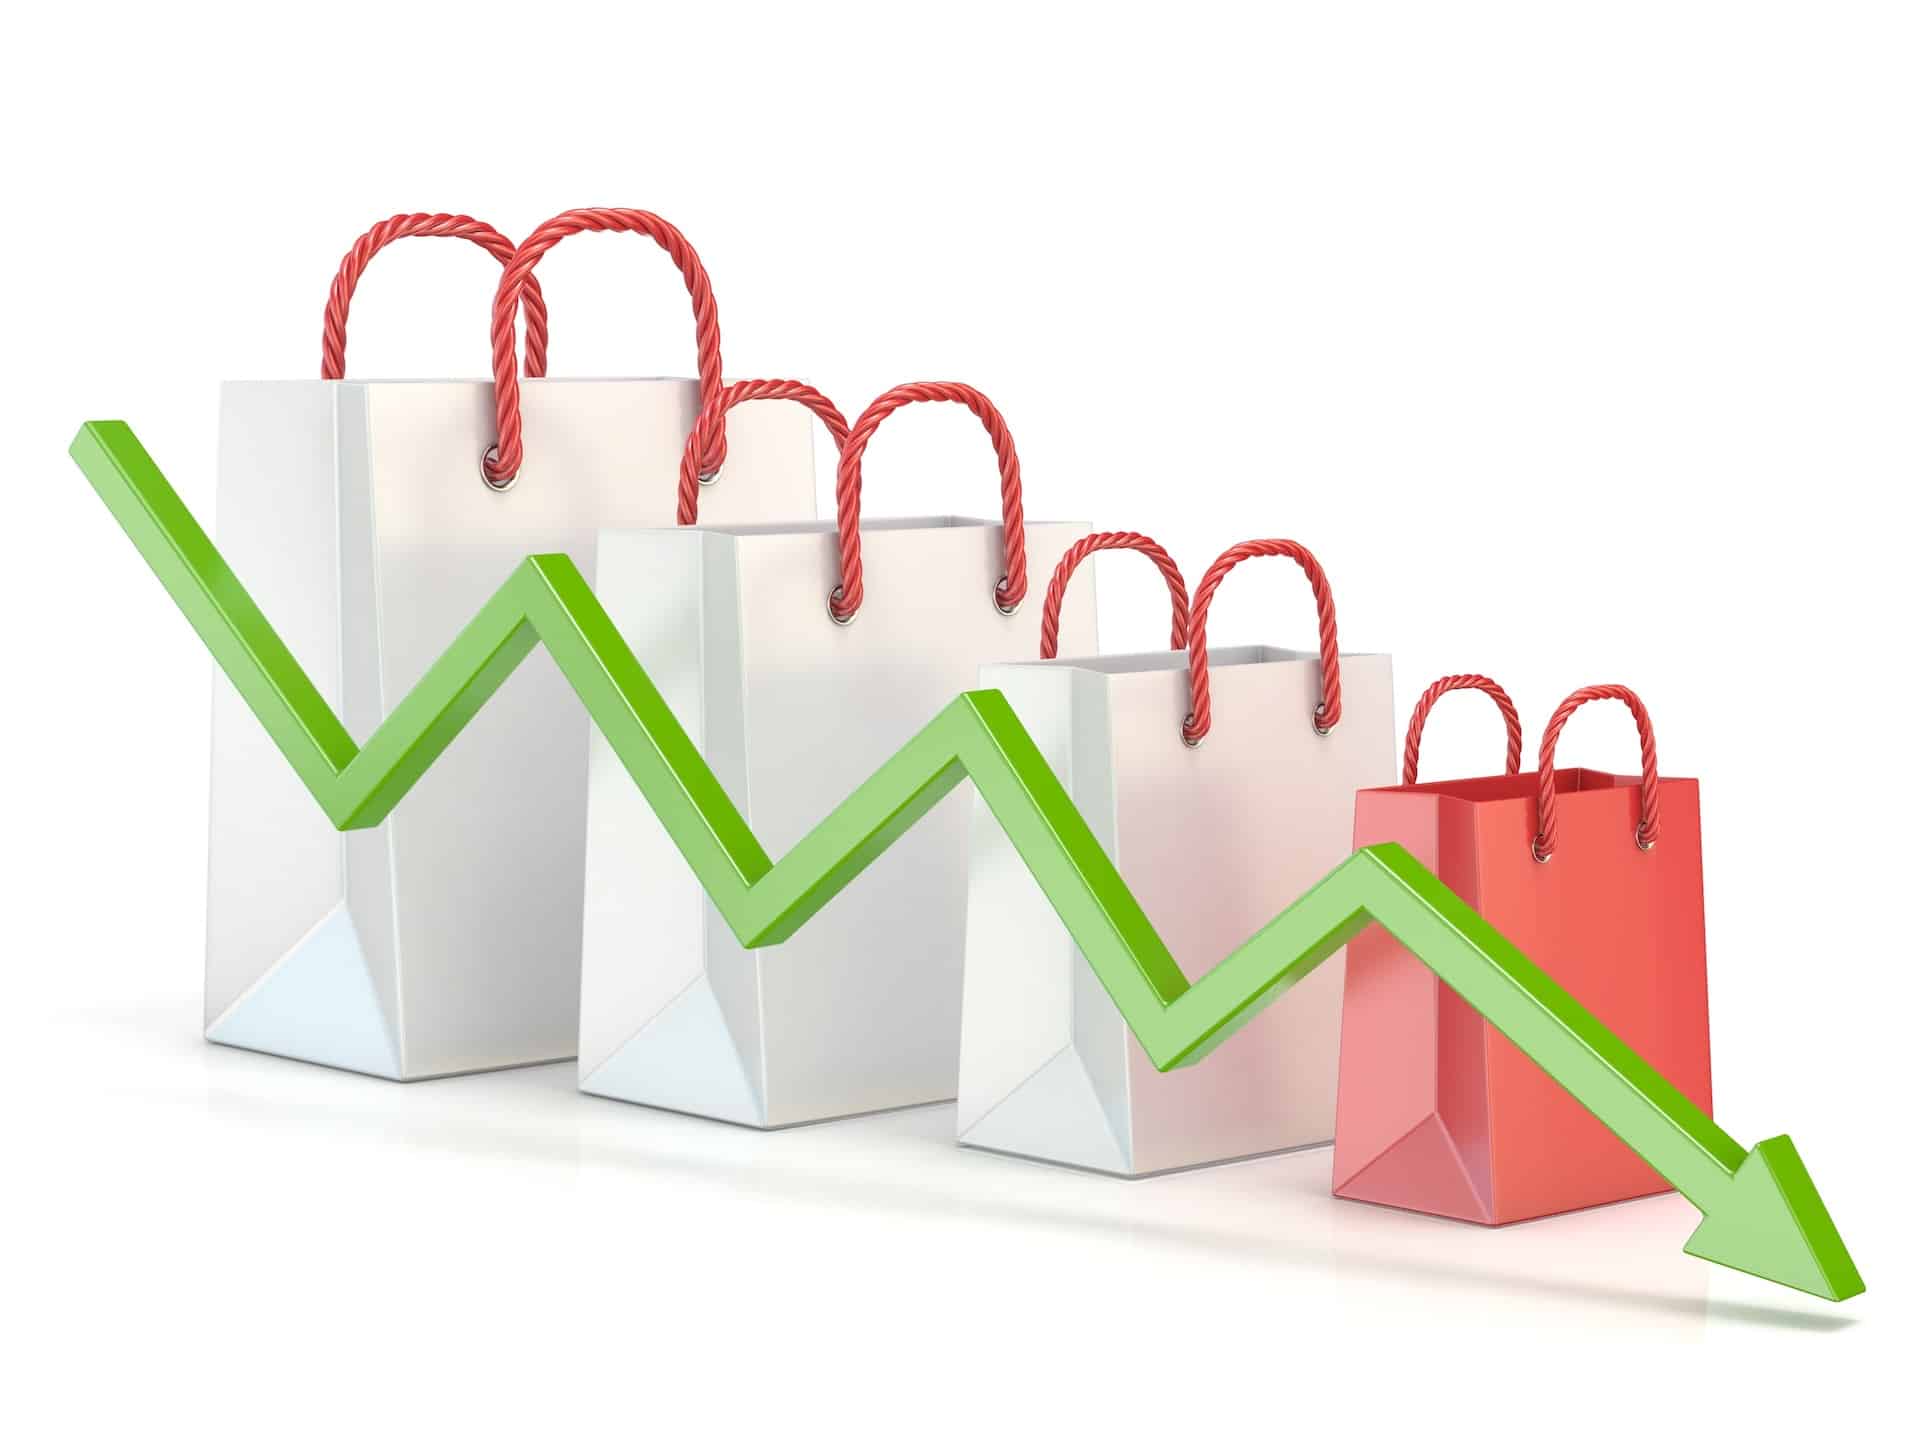 reduced consumer spending